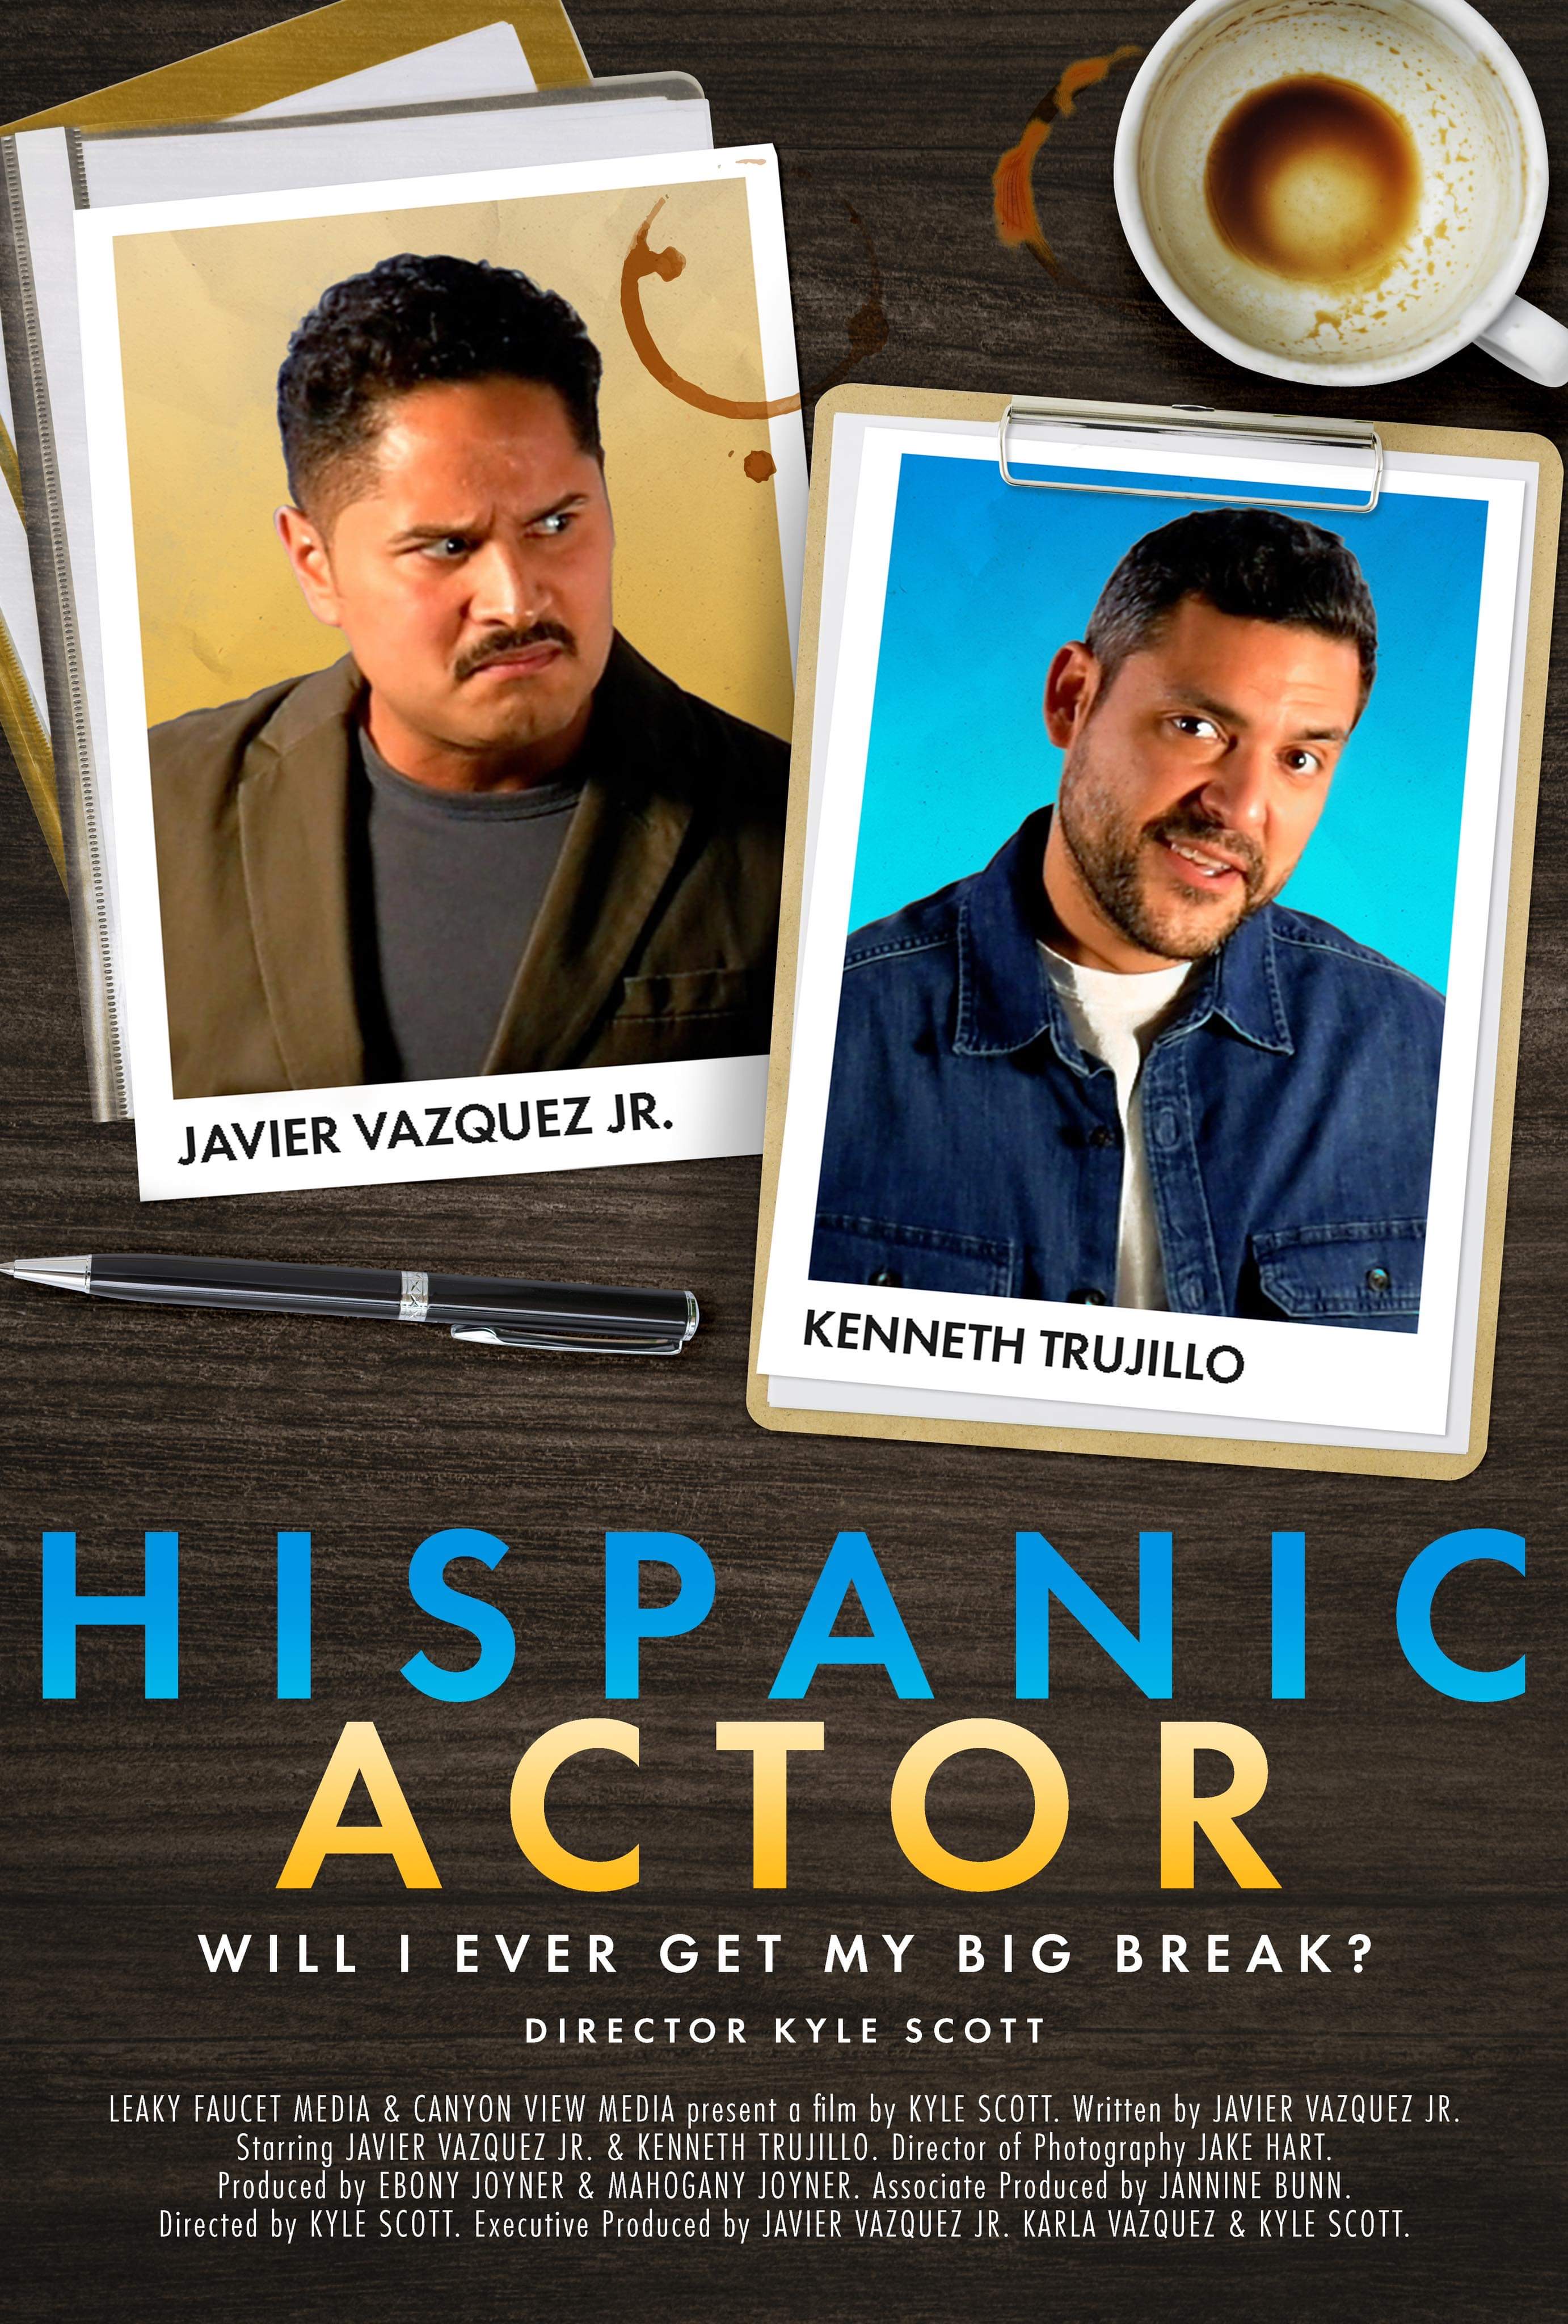 Hispanic Actor